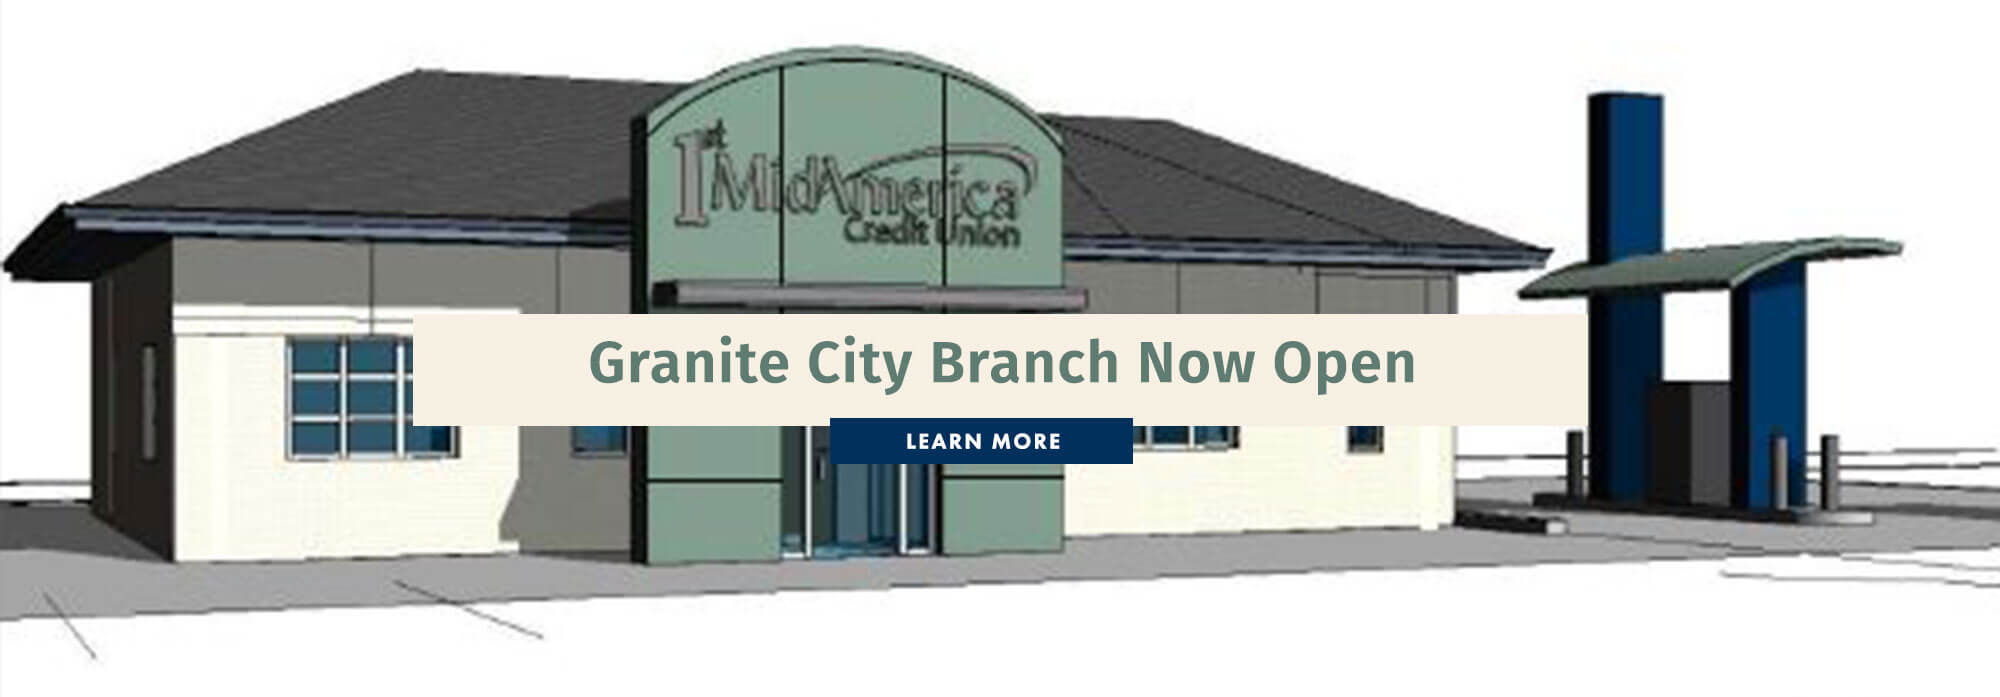 Granite City Branch Now Open